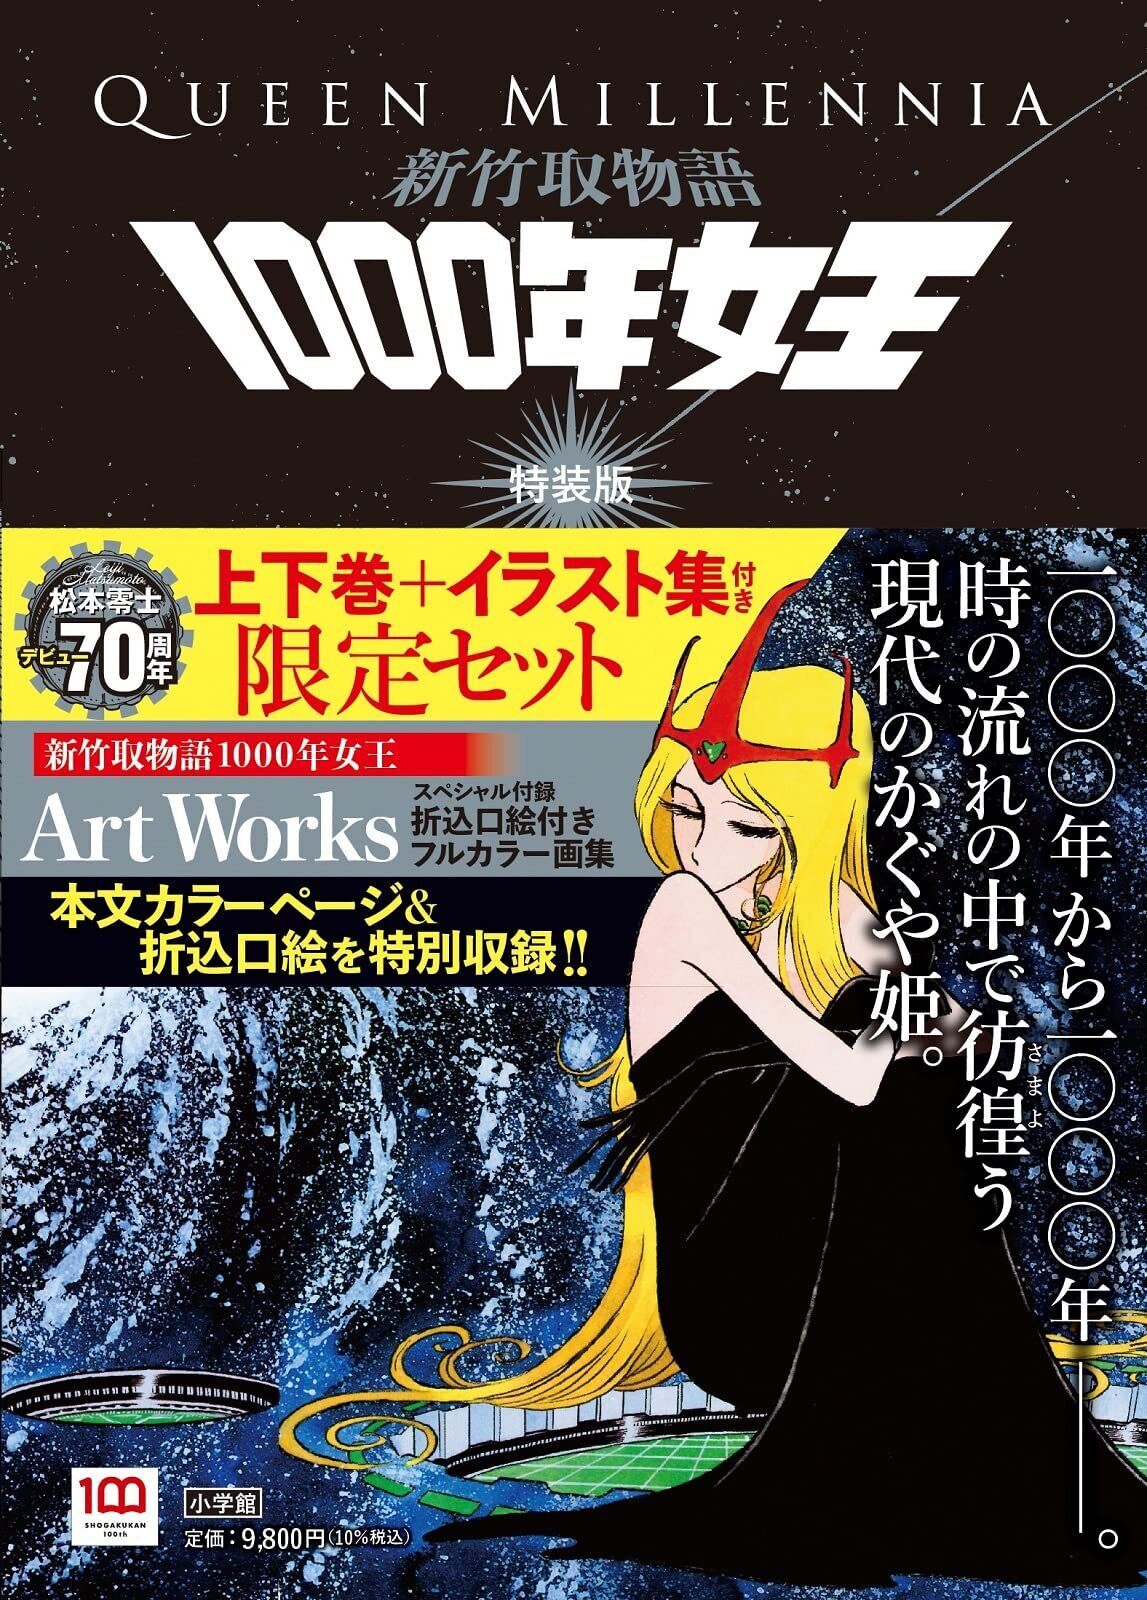 Leiji Matsumoto Queen Millennia Special Limited Ed. 2 volume Manga Art Set Book